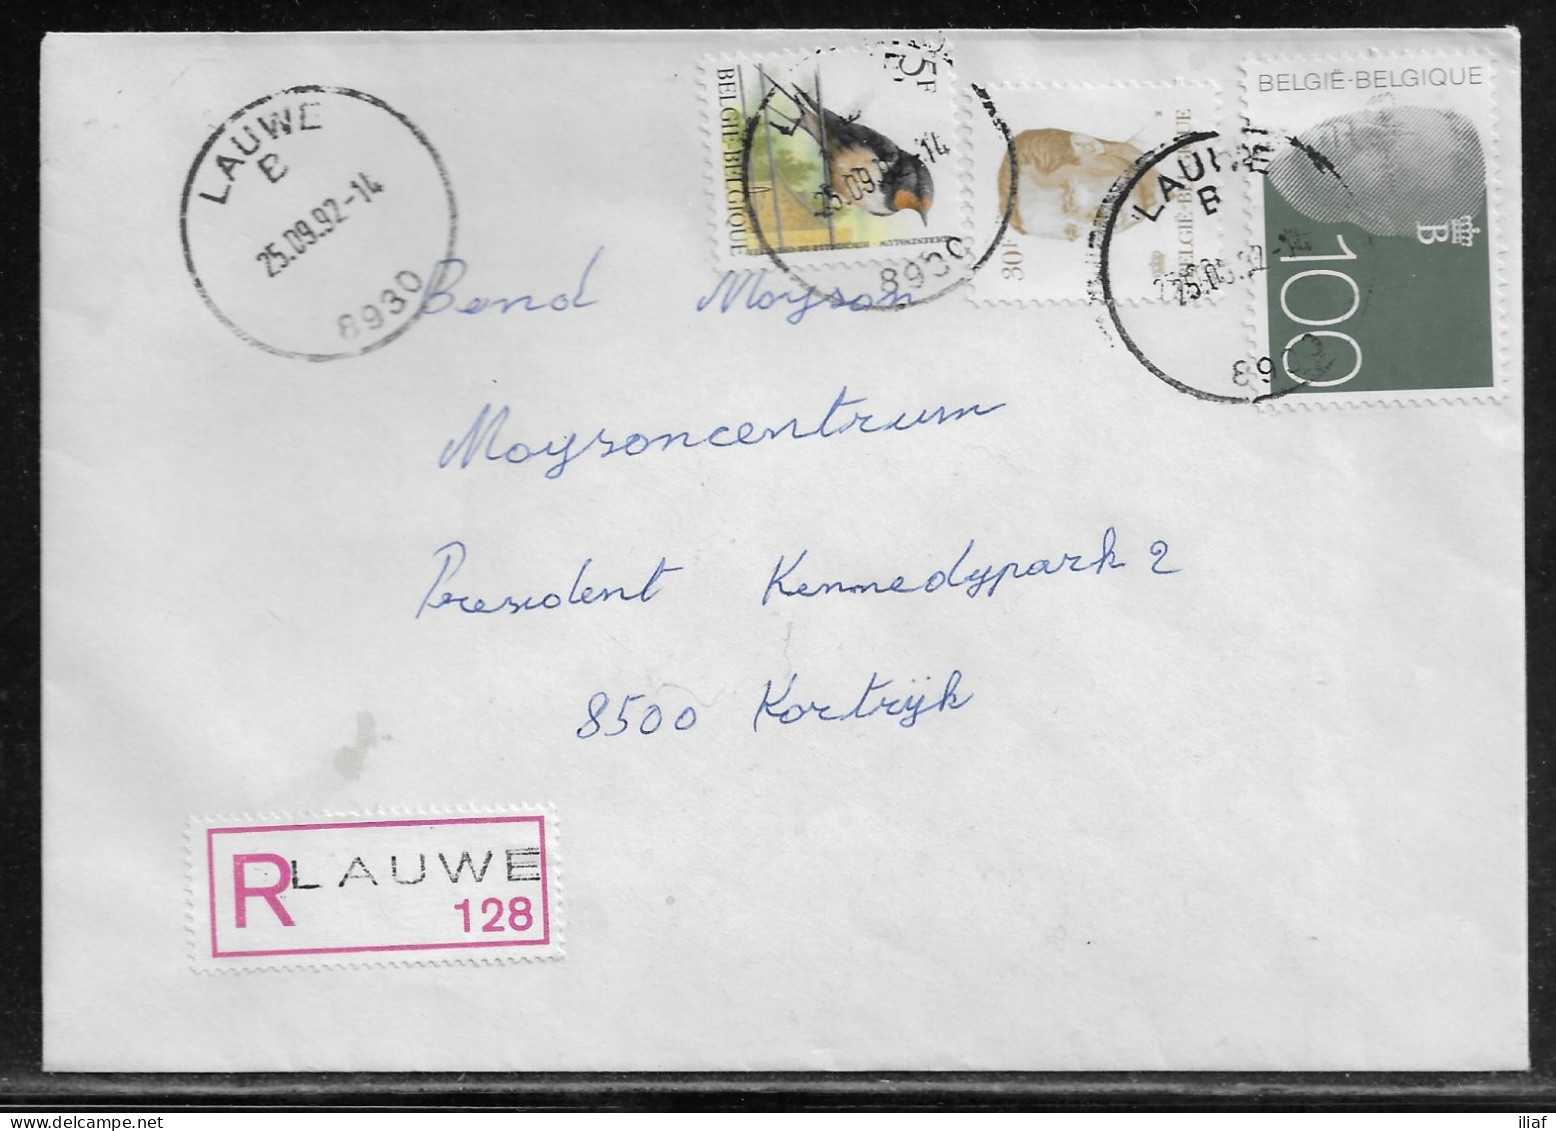 Belgium. Stamps Mi. 2527, Mi. 2533, Mi. 2212 On Registered Letter Sent From Lauwe On 25.09.1992 For Kortrijk. - Cartas & Documentos